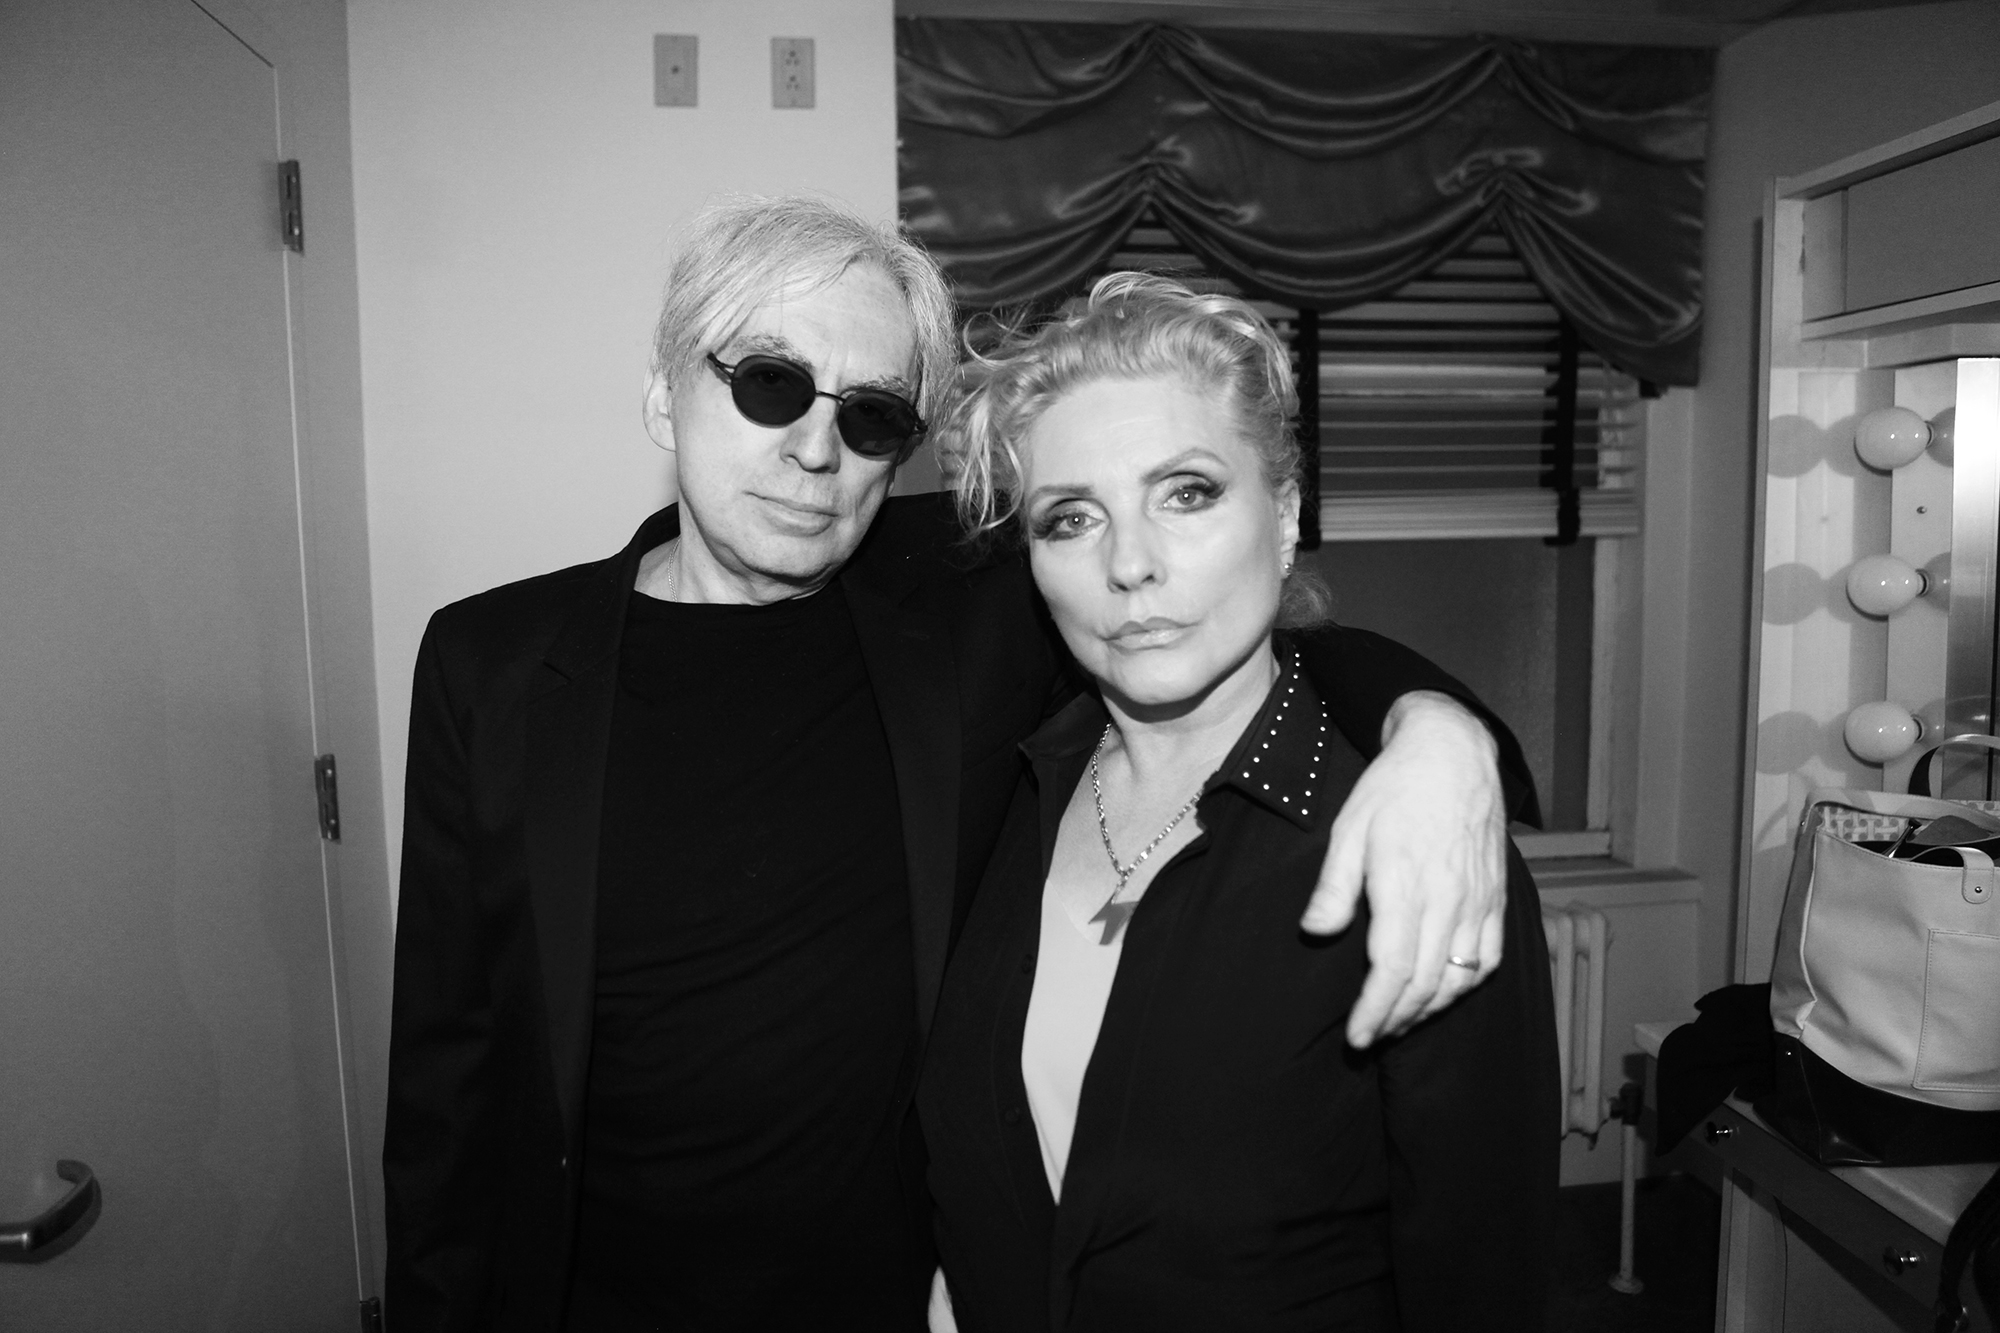 Blondie's Chris Stein and Debbie Harry.